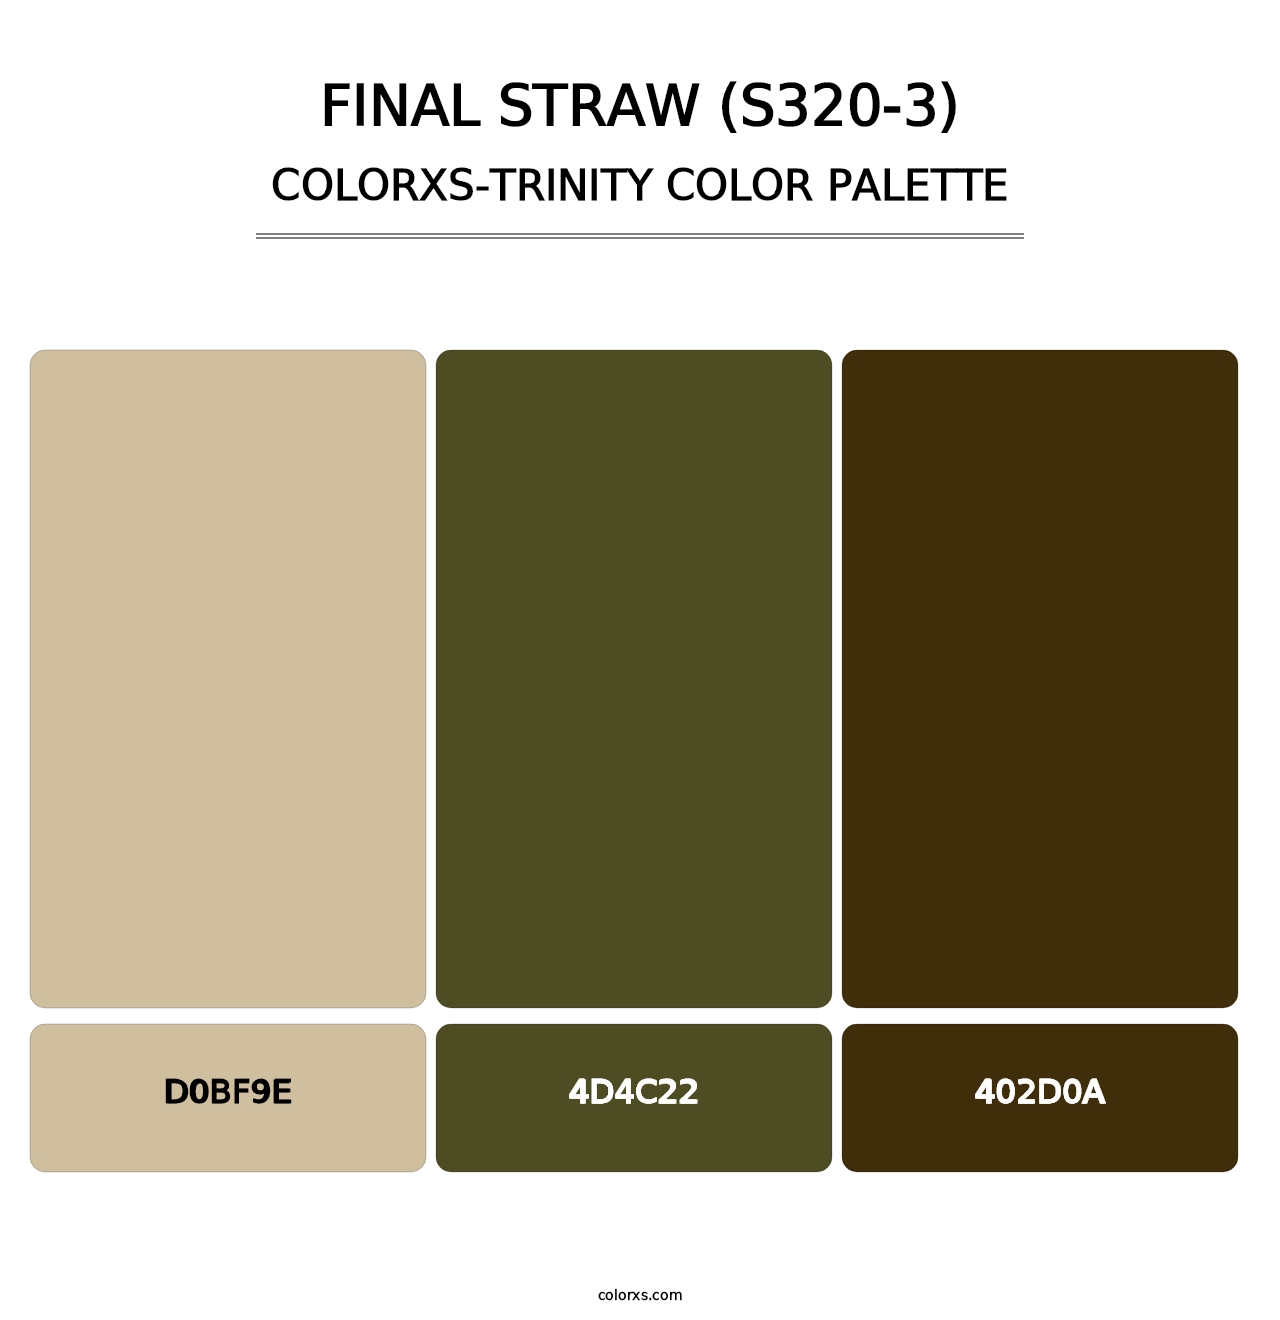 Final Straw (S320-3) - Colorxs Trinity Palette